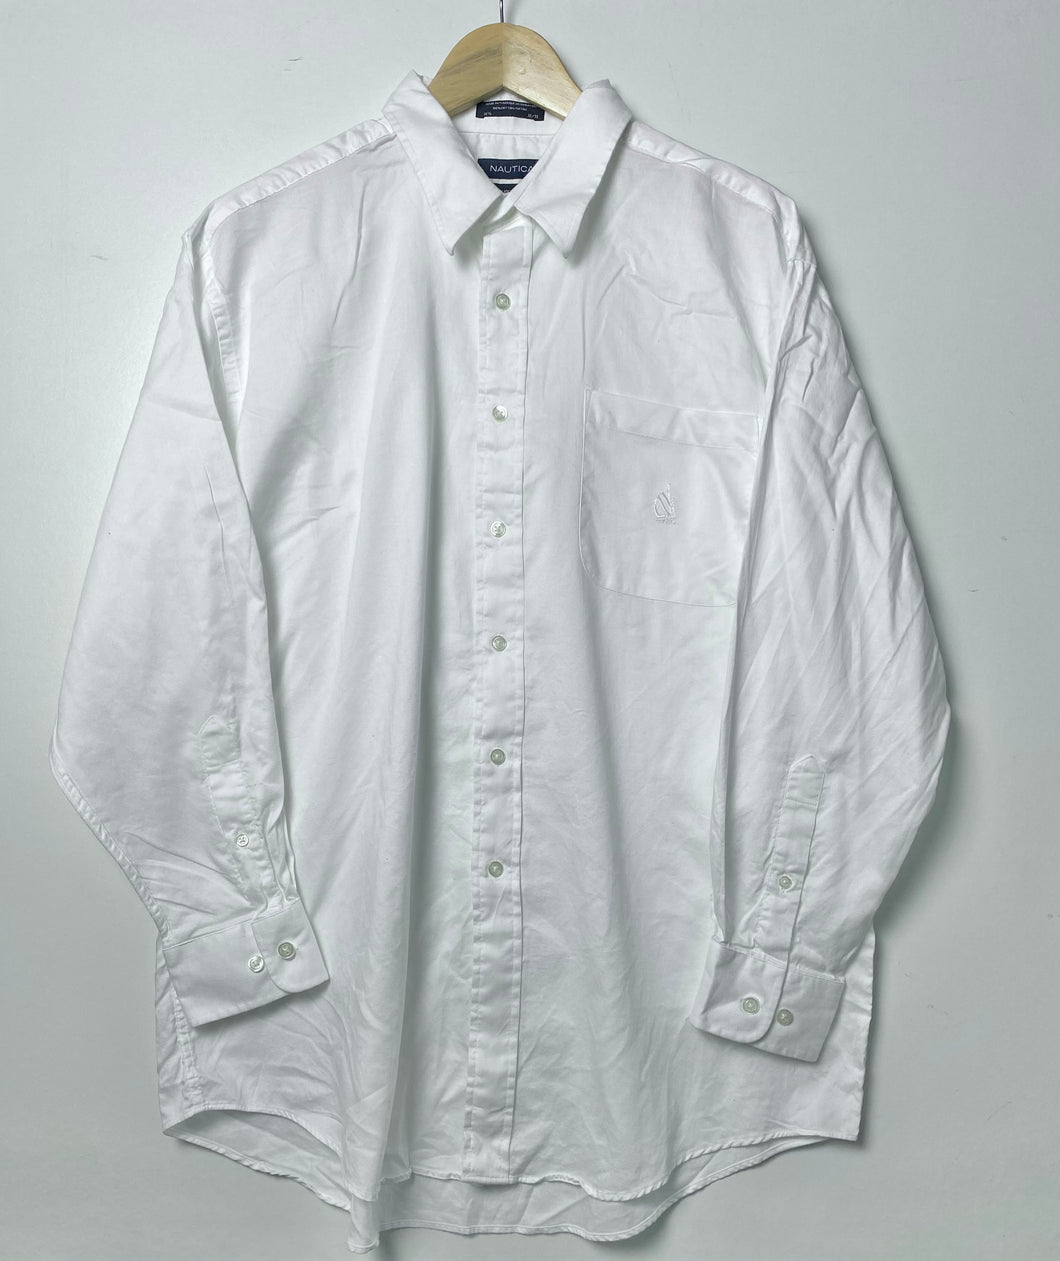 Nautica shirt (L)